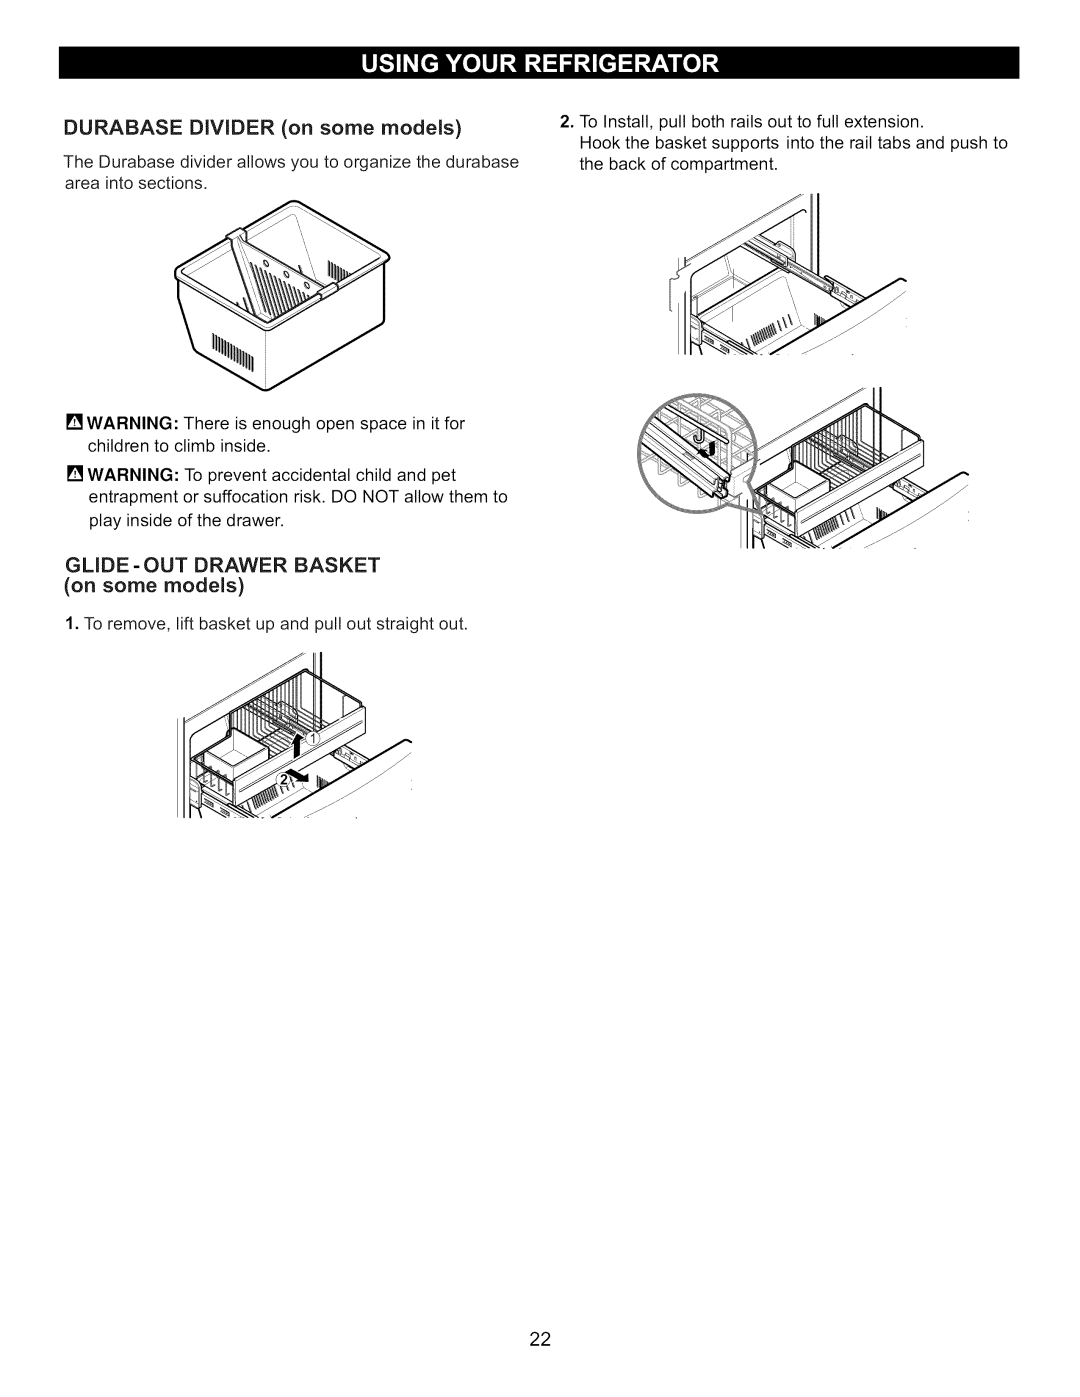 Kenmore 795.7130-K manual GLIDE- OUT DRAWER BASKET on some models 